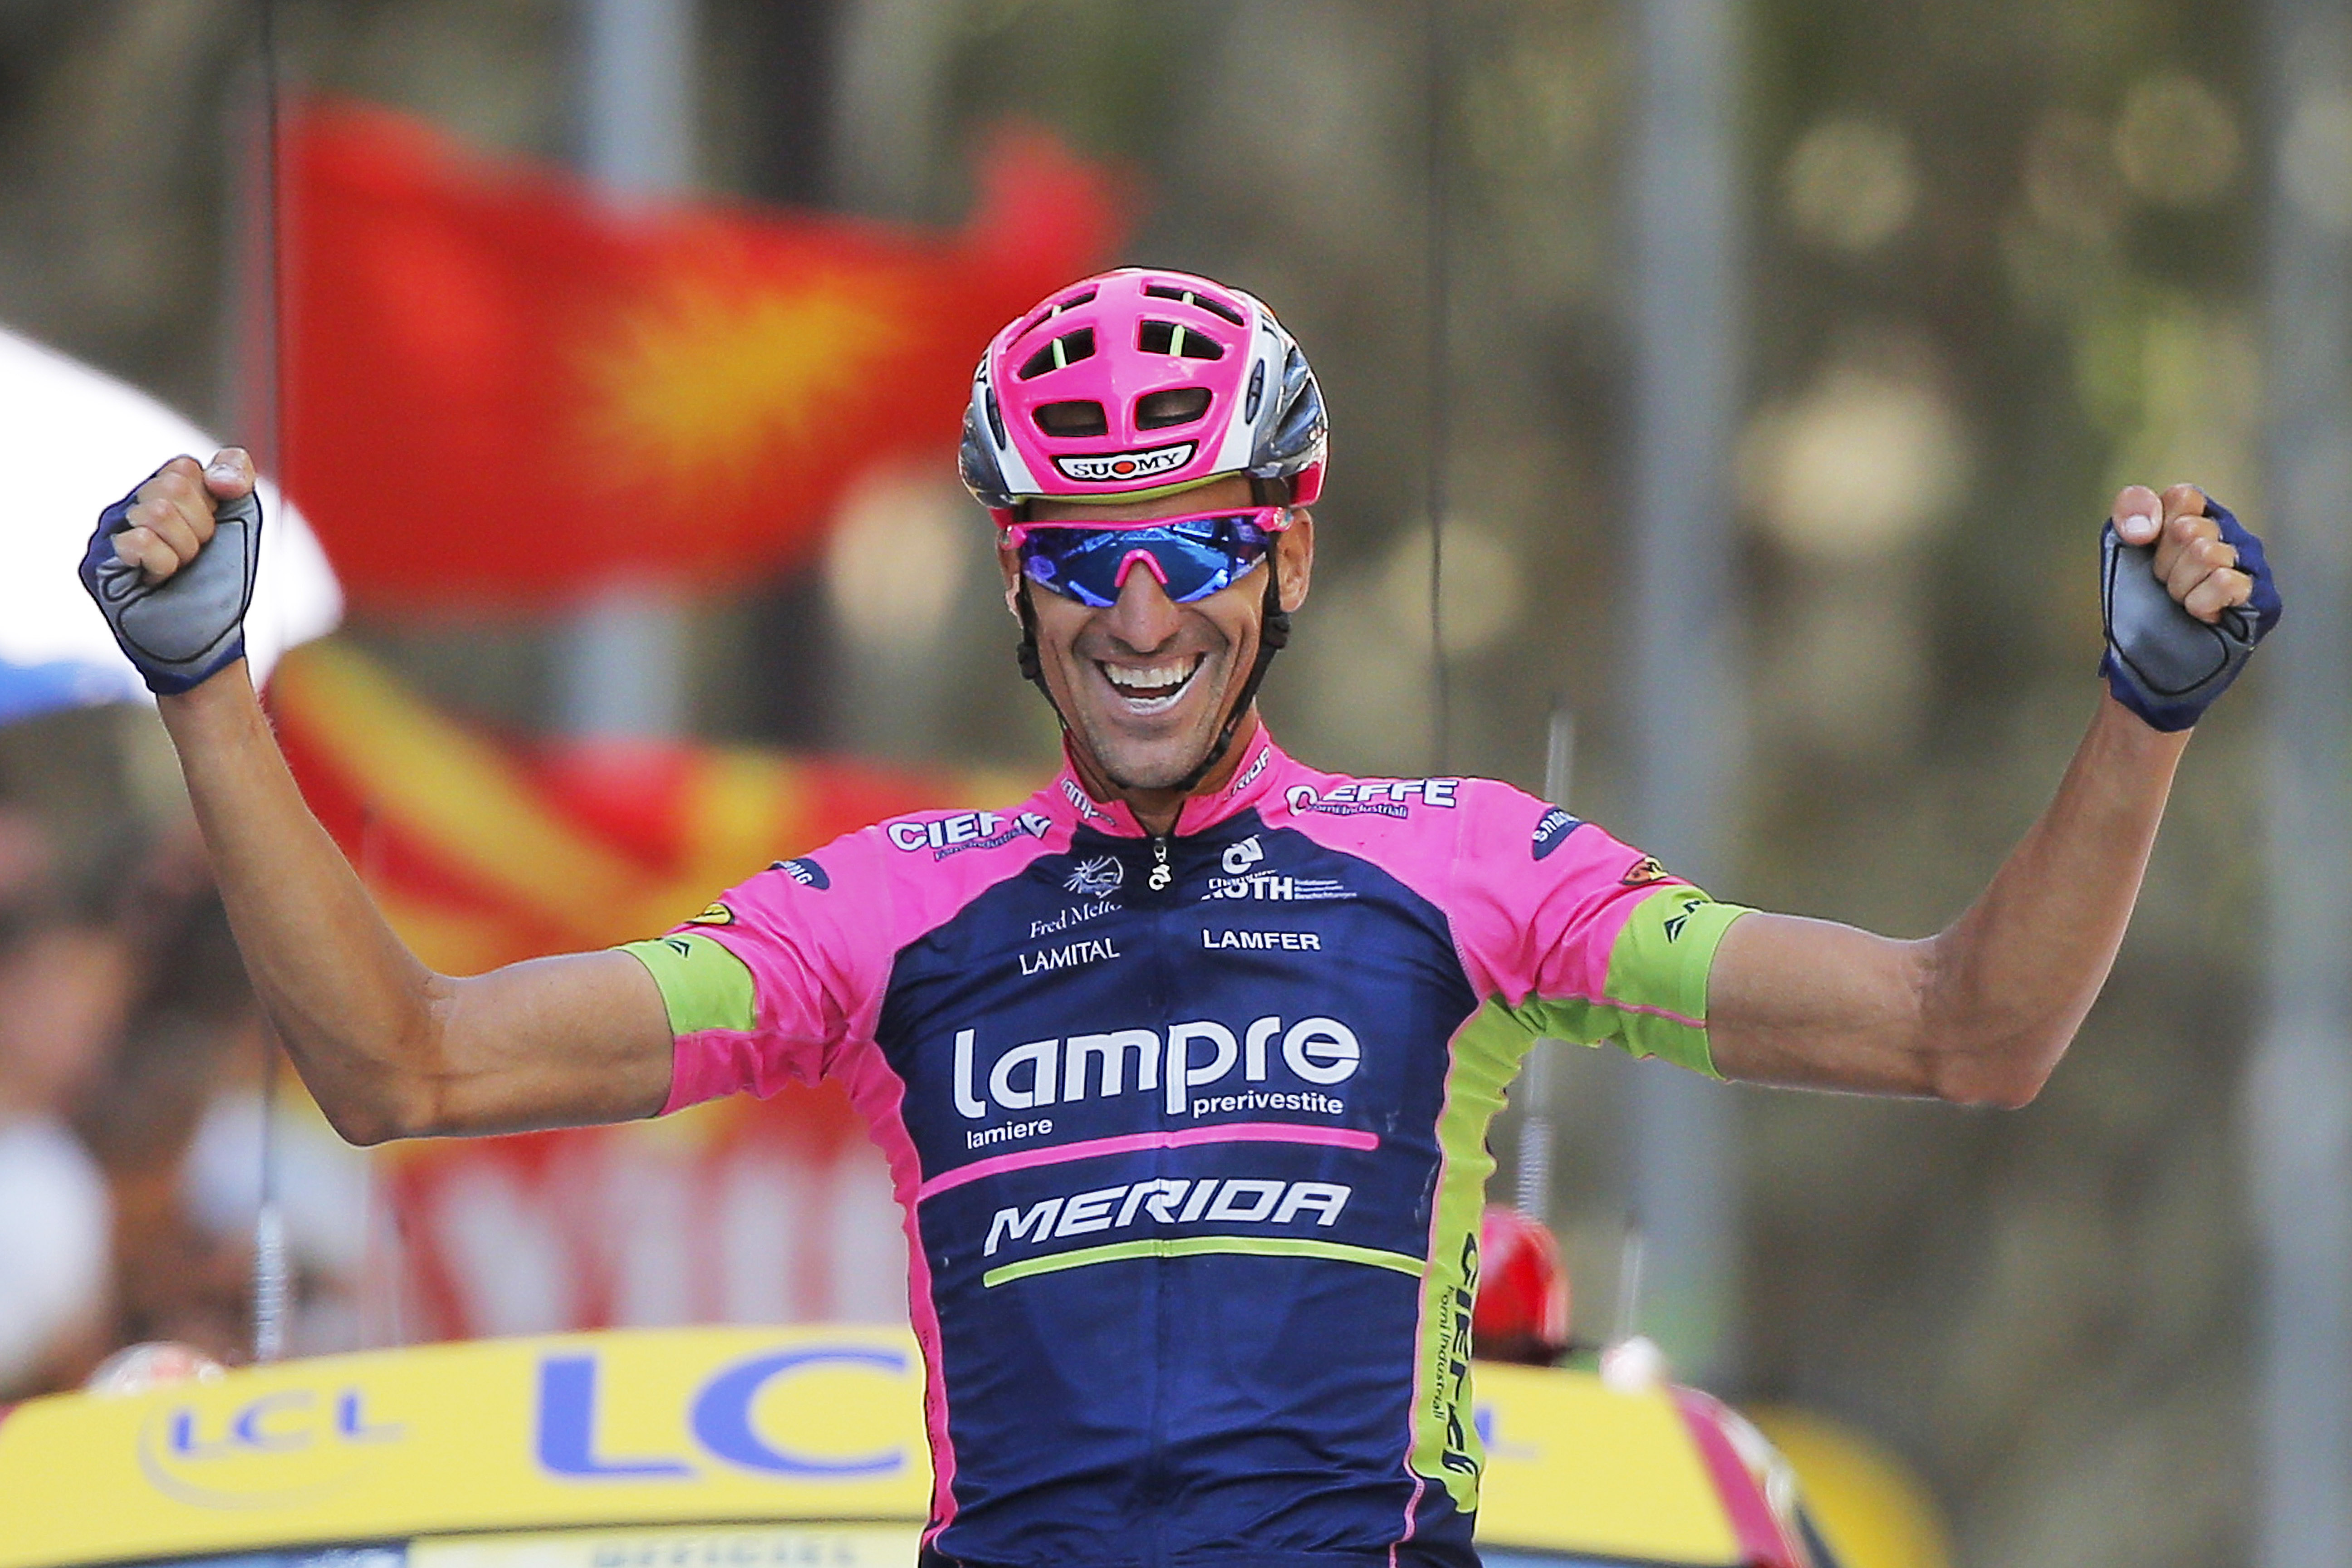 Ruben Plaza of Spain celebrates winning stage 16 of the Tour de France. Photo: AP